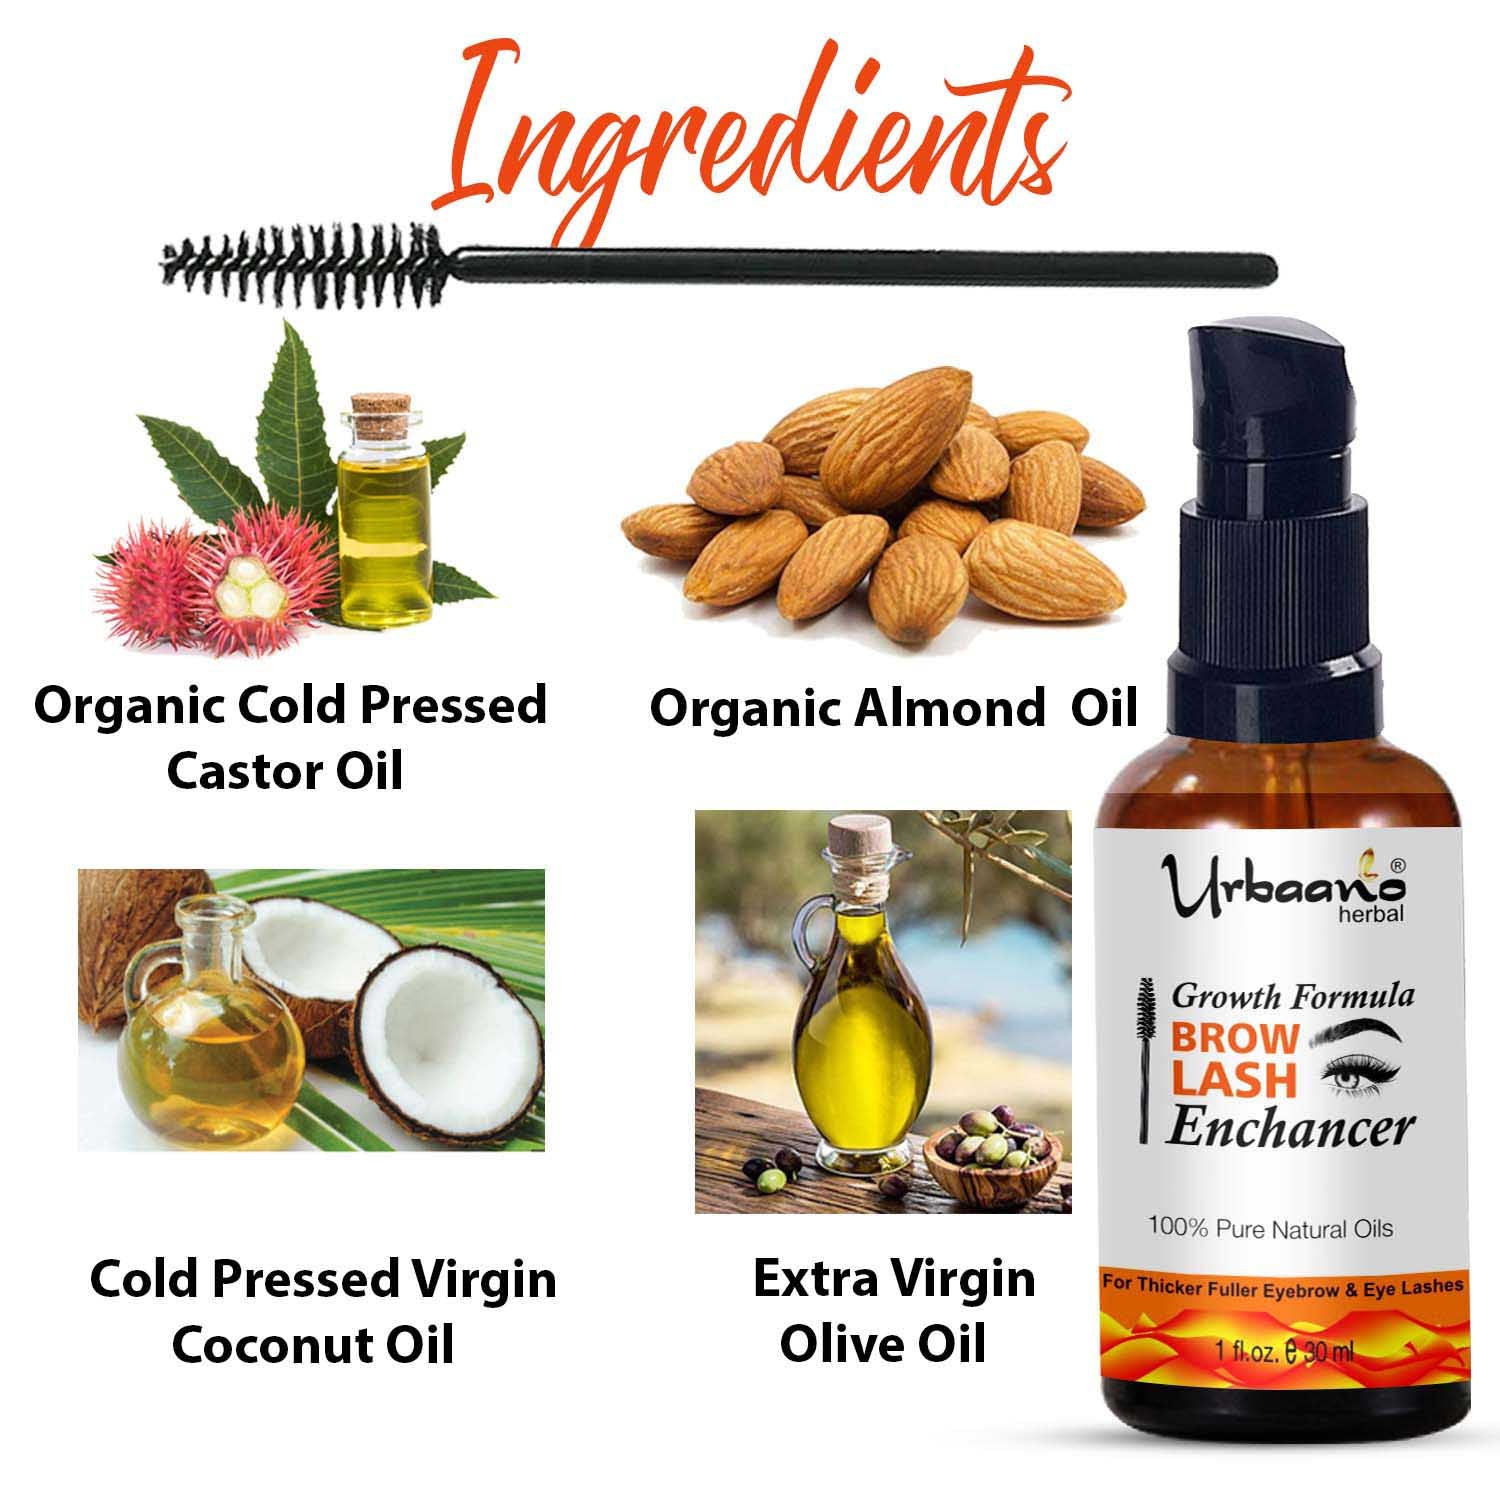 urbaano herbal eyebrow lash enhancer growth formula with organic almond, castor, coconut oil , virgin olve oil